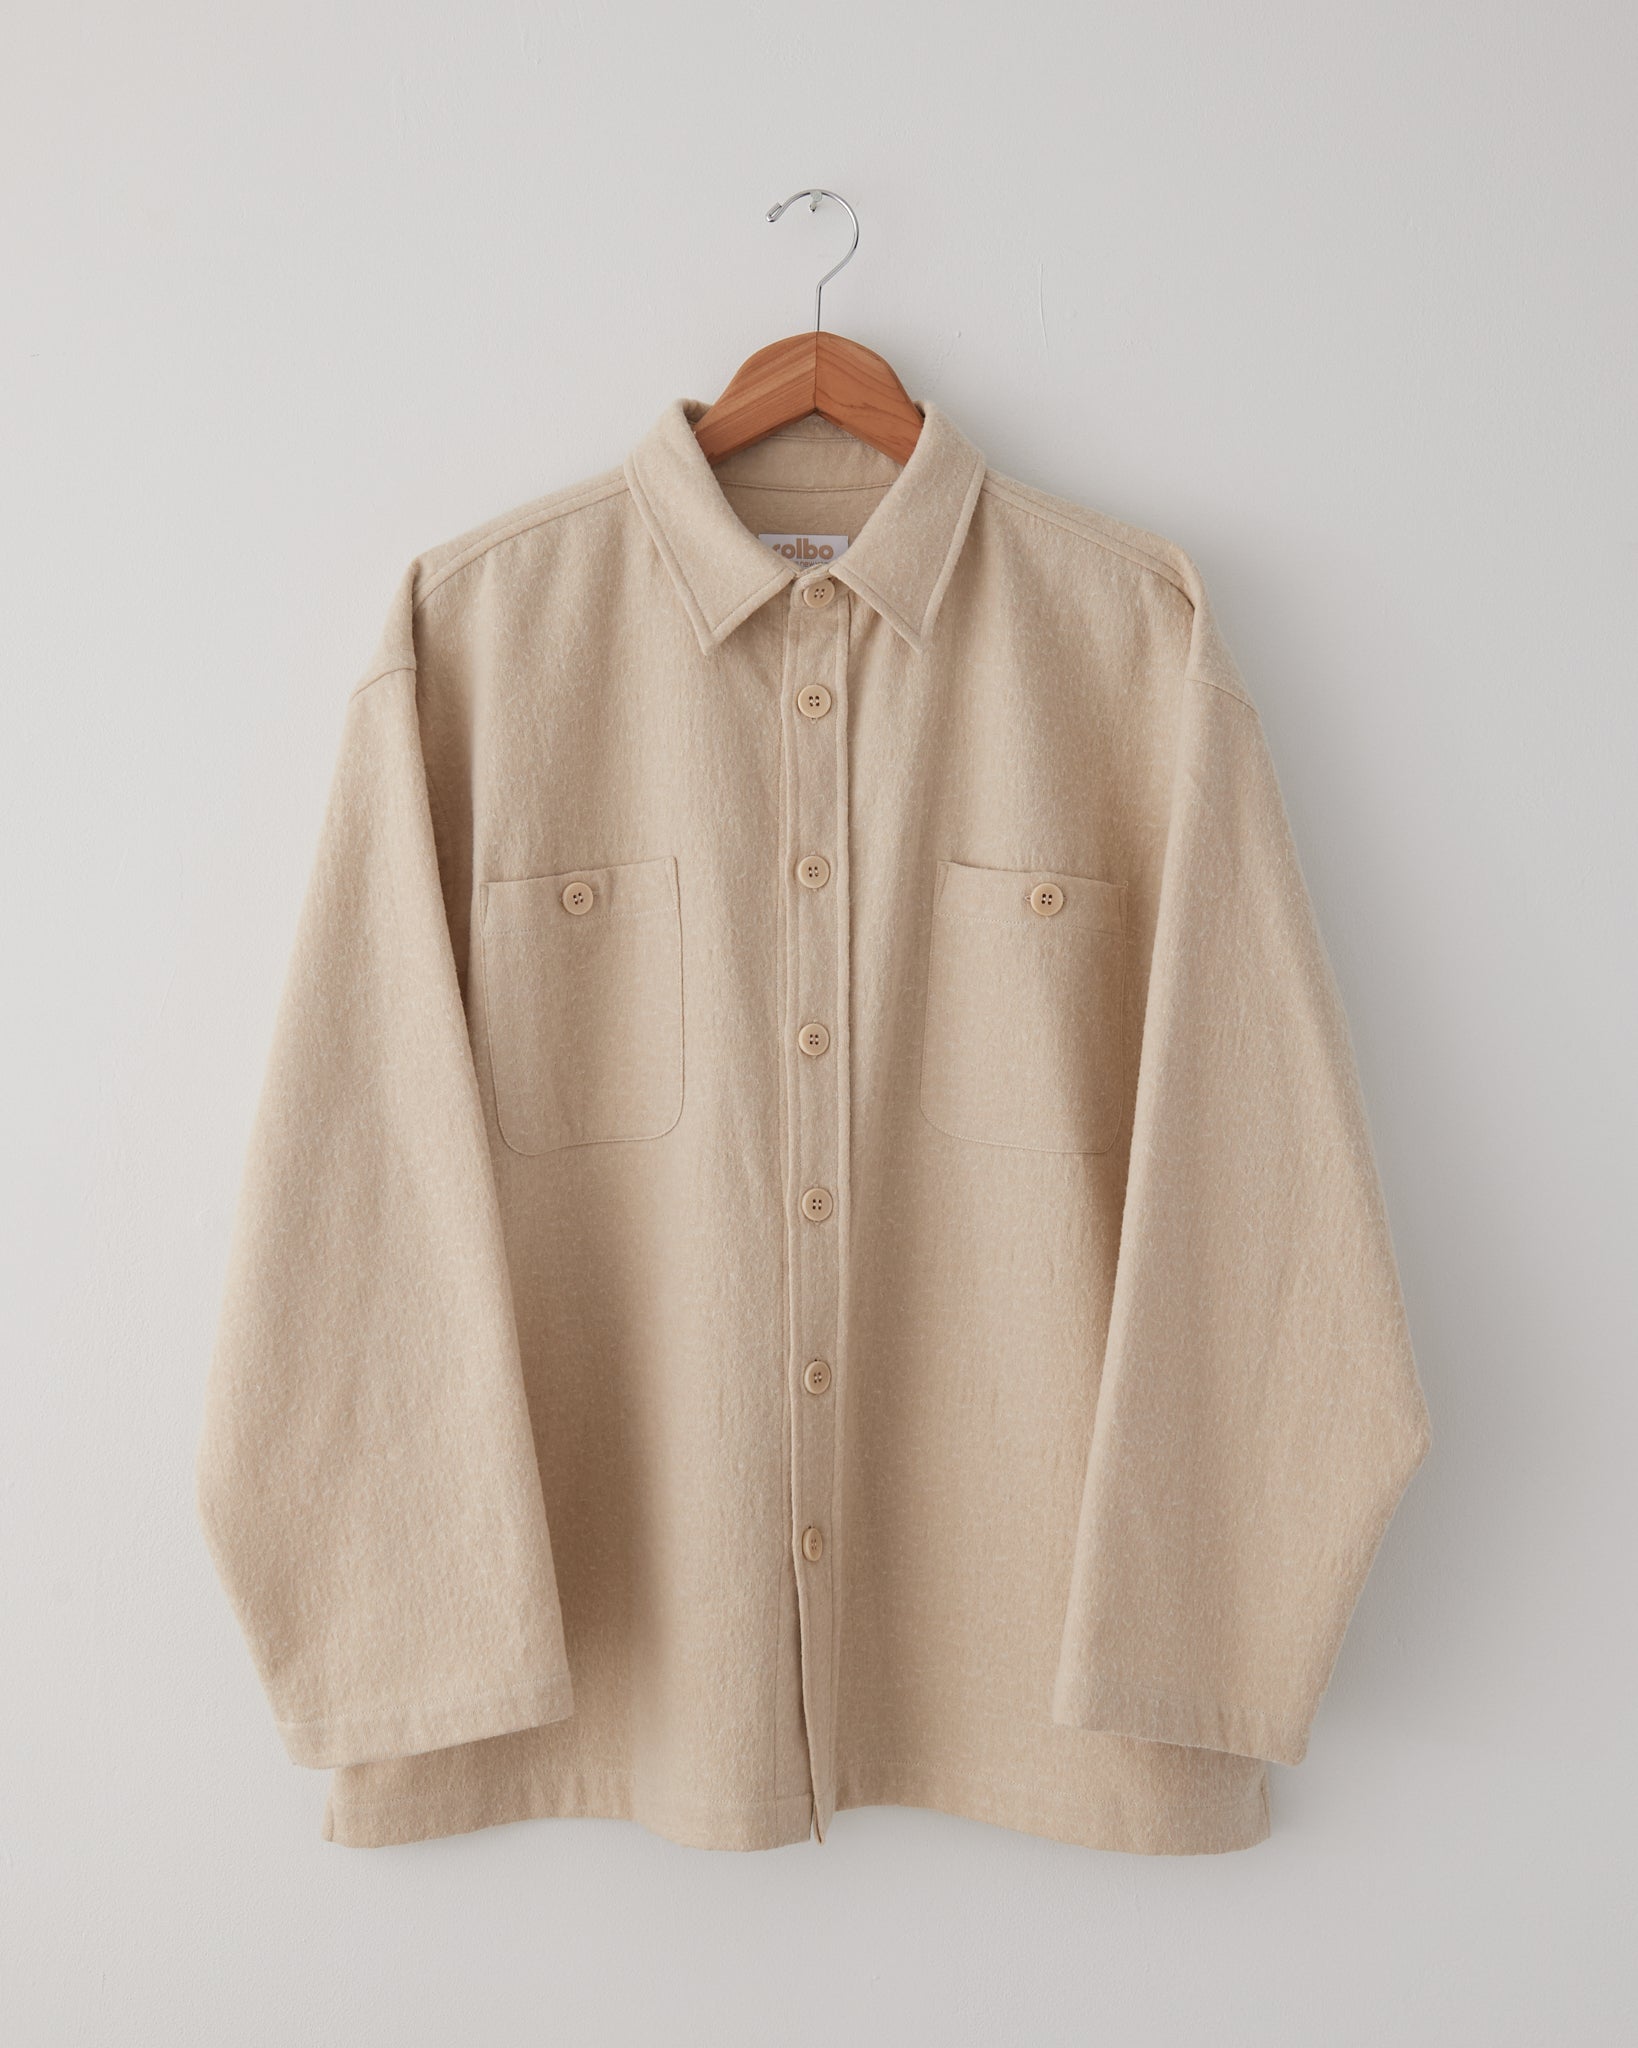 Shirt Jacket, Wool Cotton